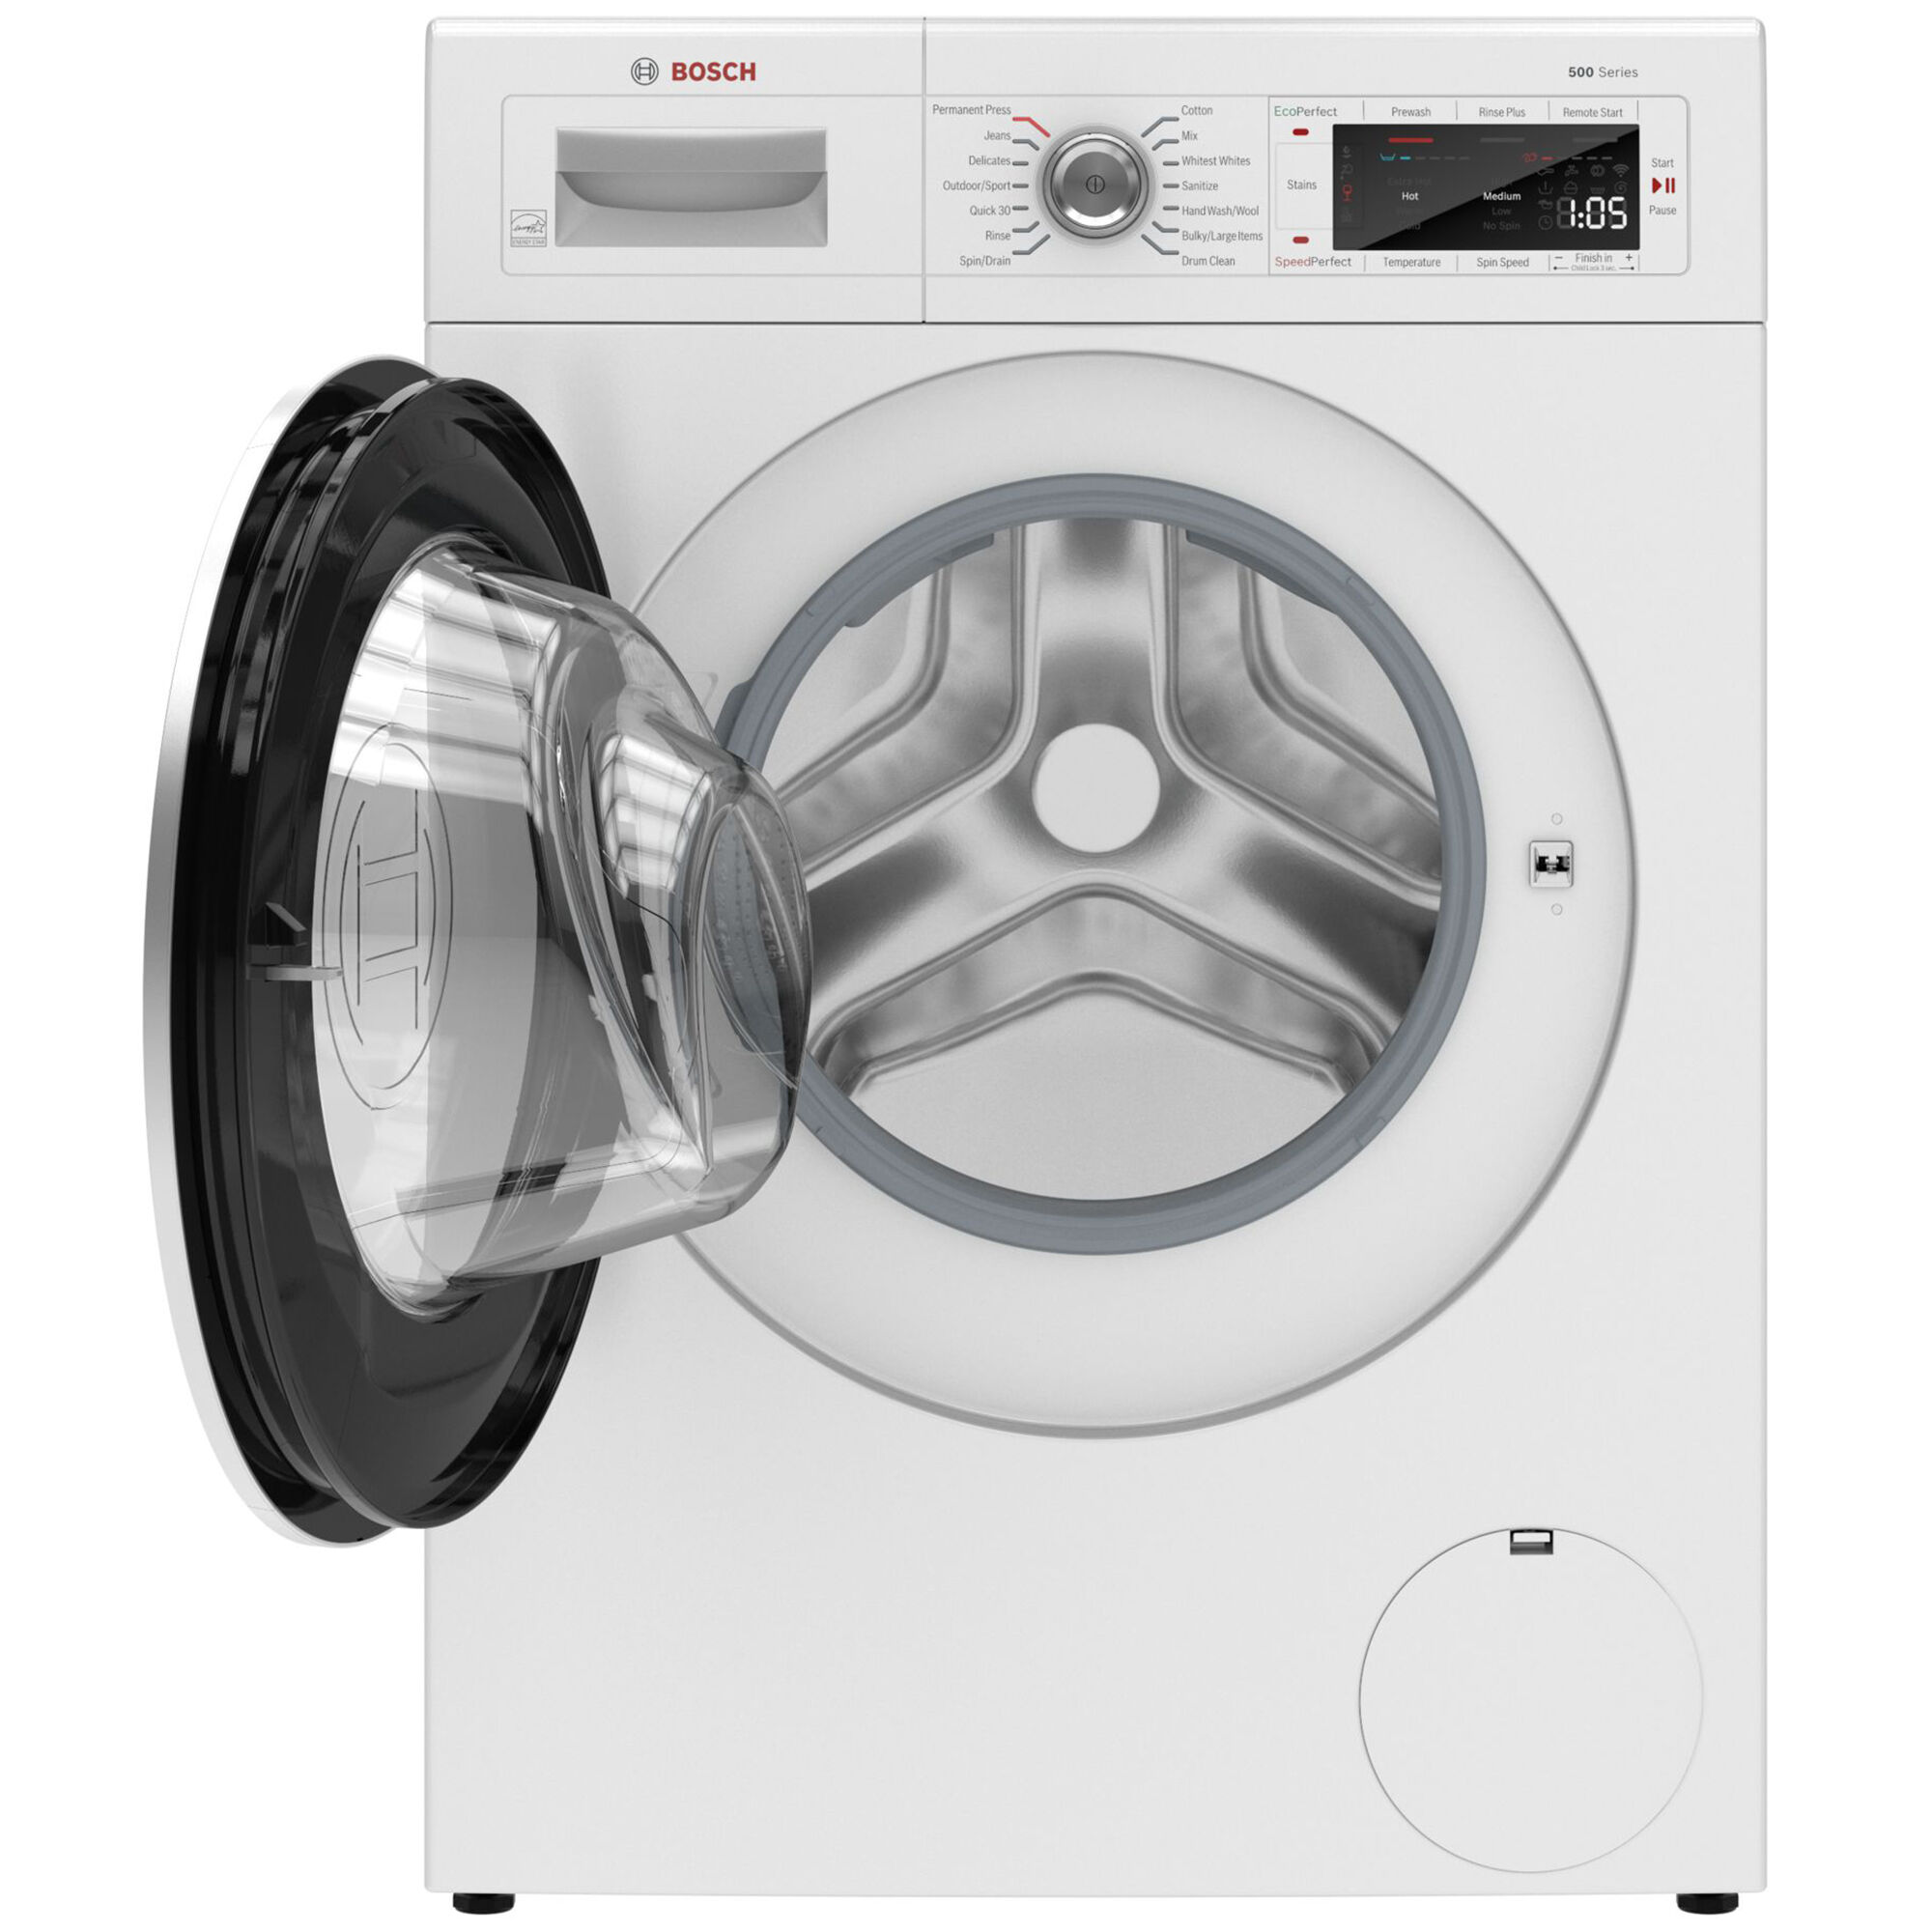 Bosch Washing Machine Soap Dispenser Hose 